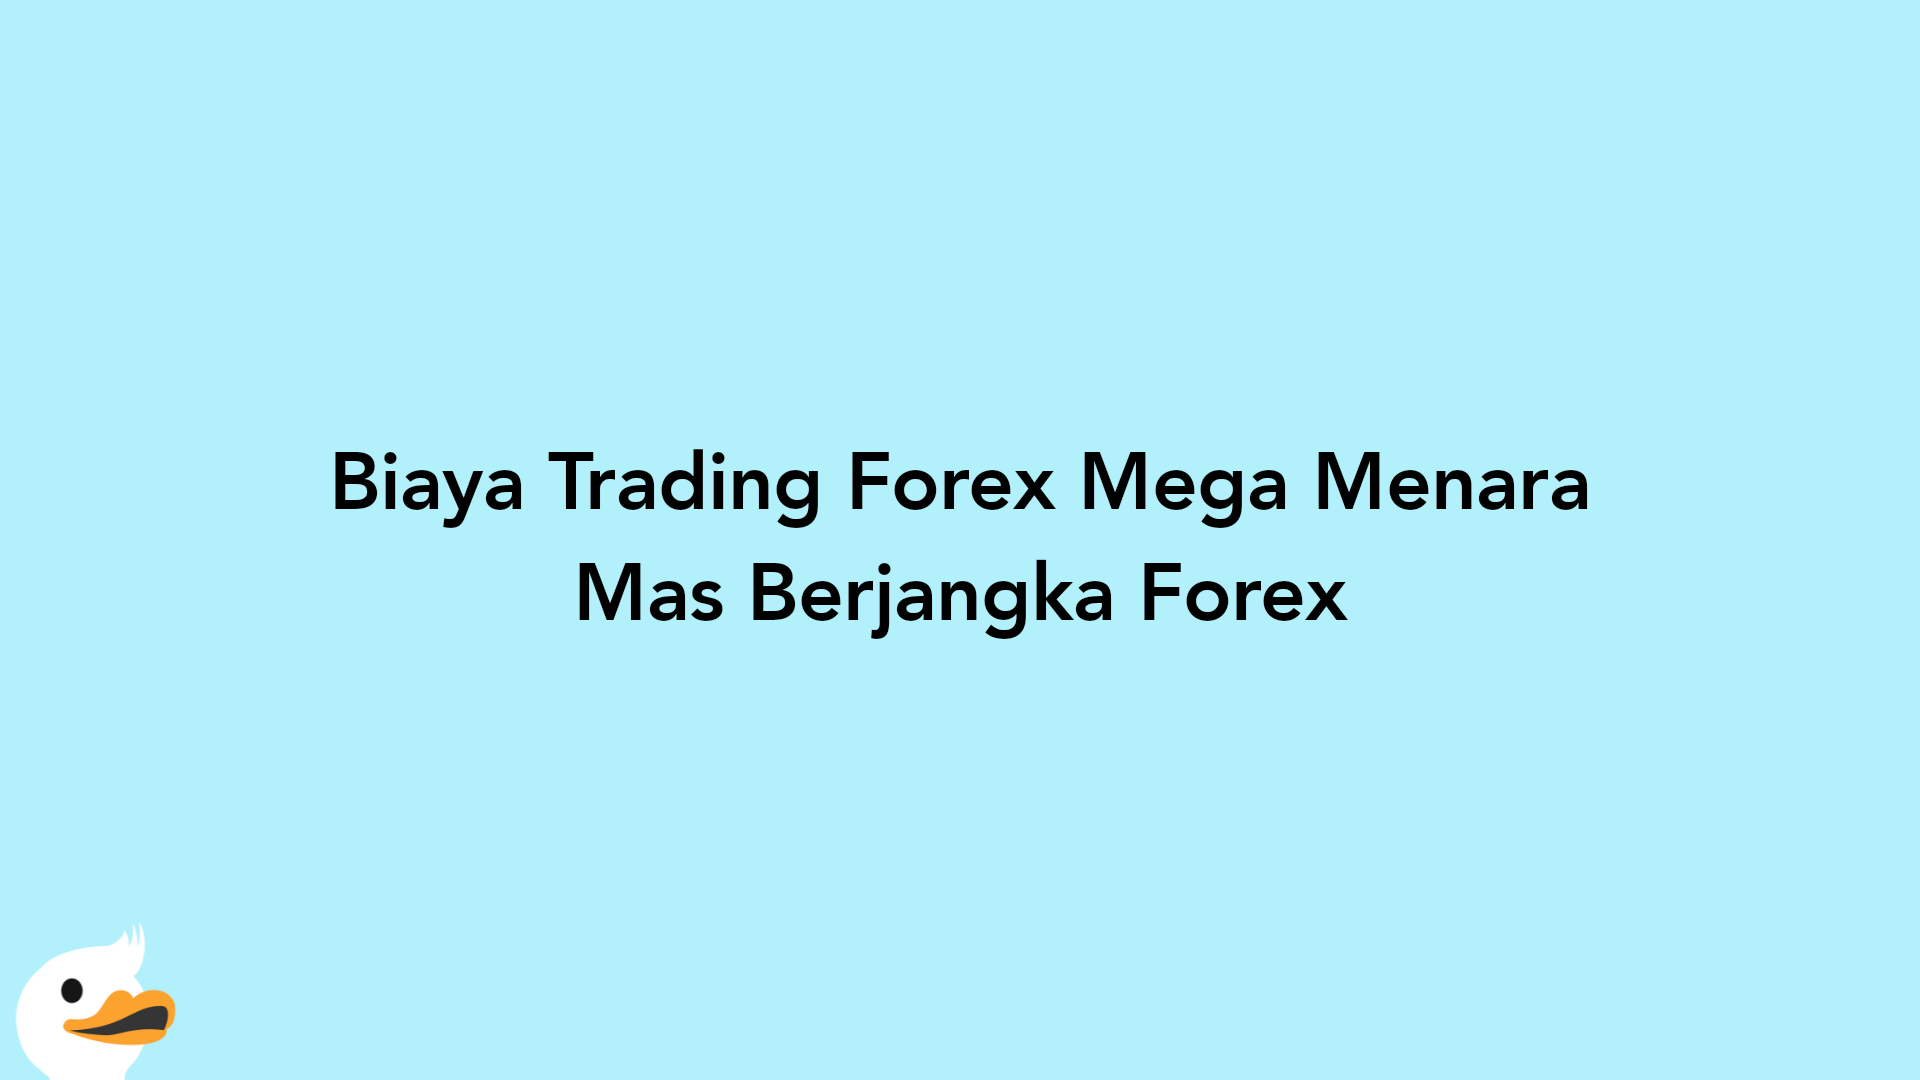 Biaya Trading Forex Mega Menara Mas Berjangka Forex